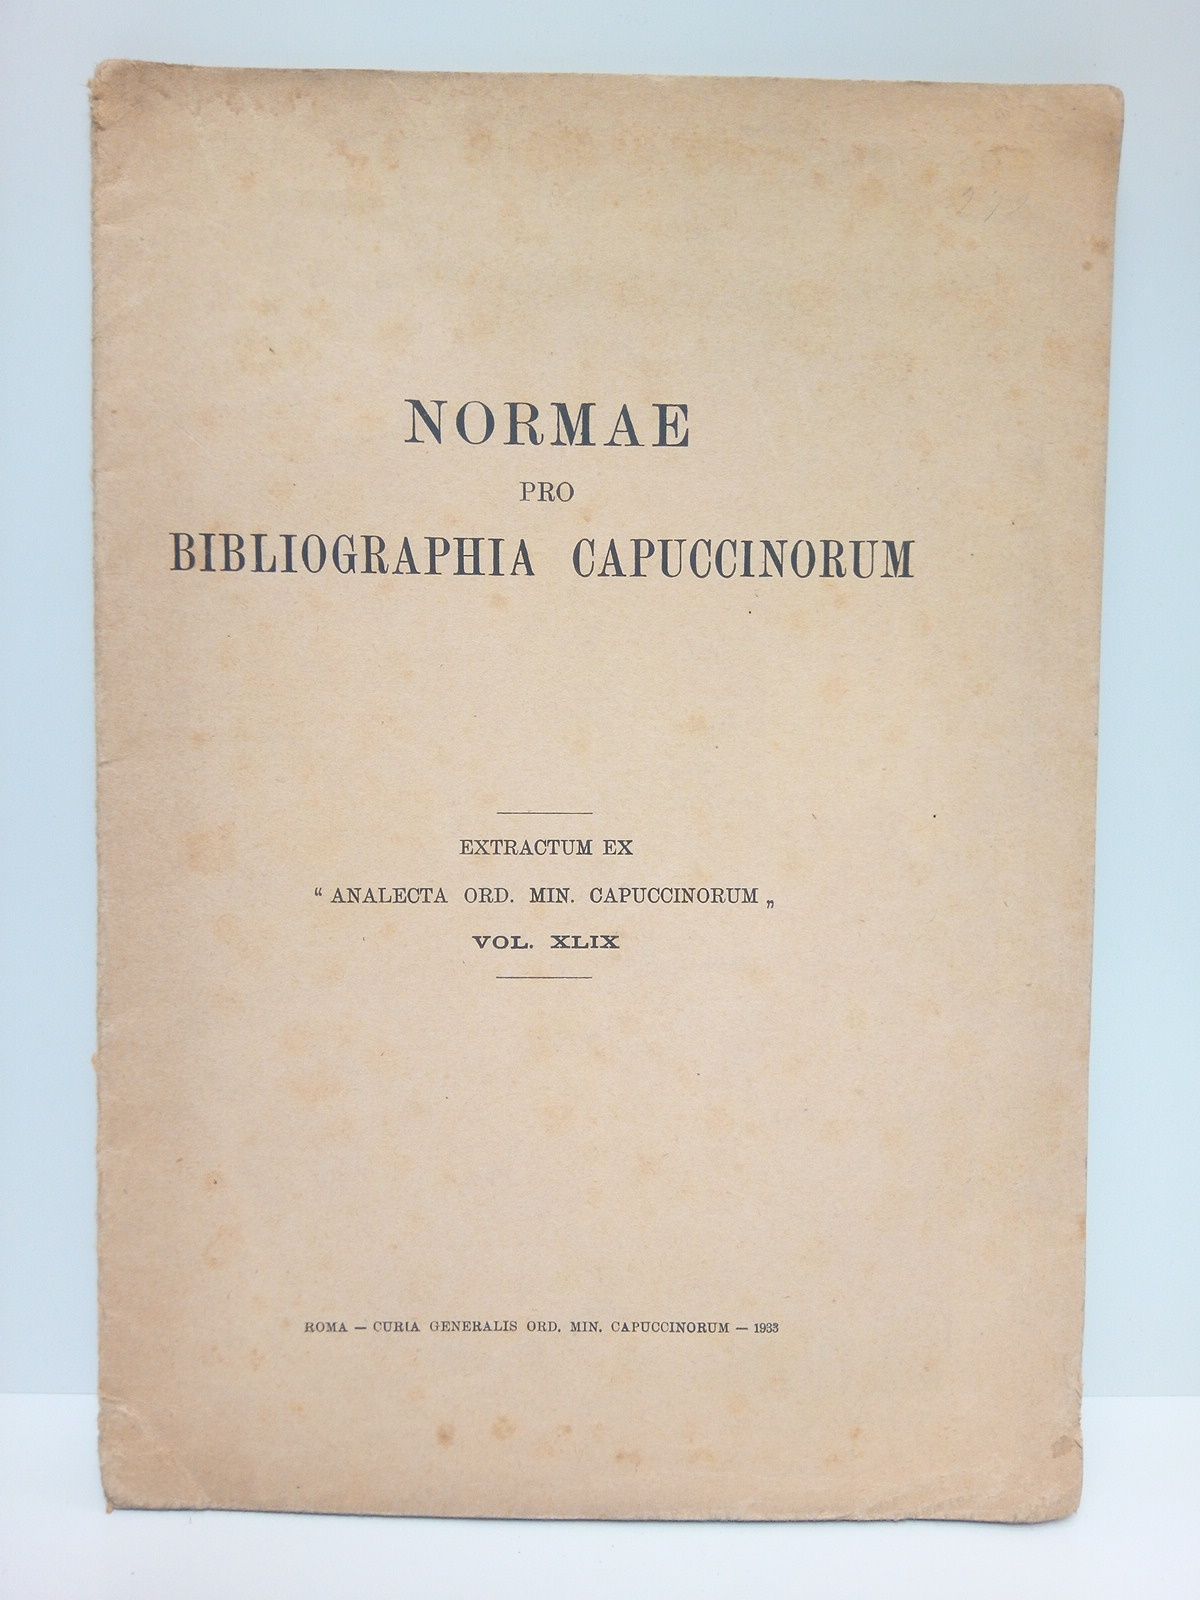 ANALECTA ORD. MIN. CAPUCCINORUM - Normae pro Bibliographia Capuccinorum